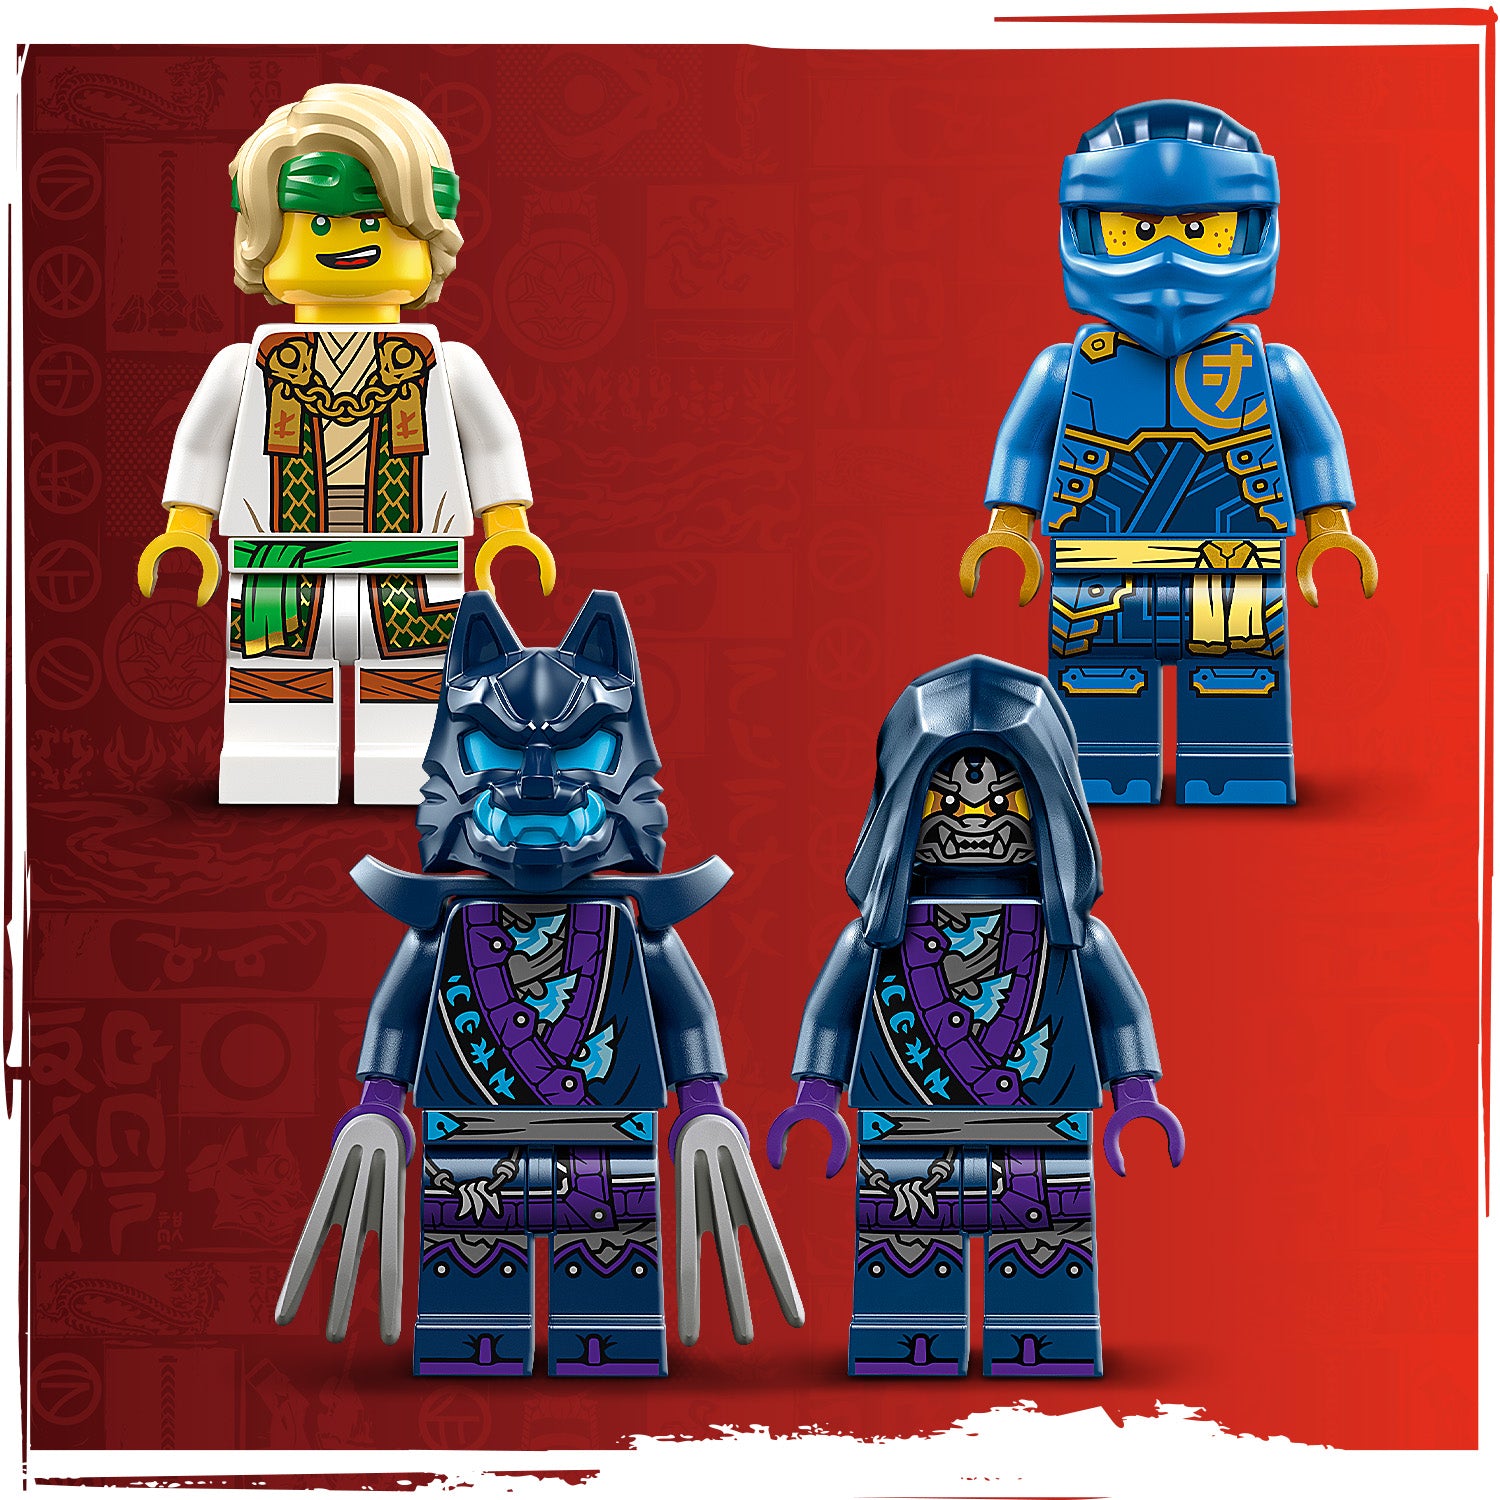 Lego 71805 Jays Mech Battle Pack